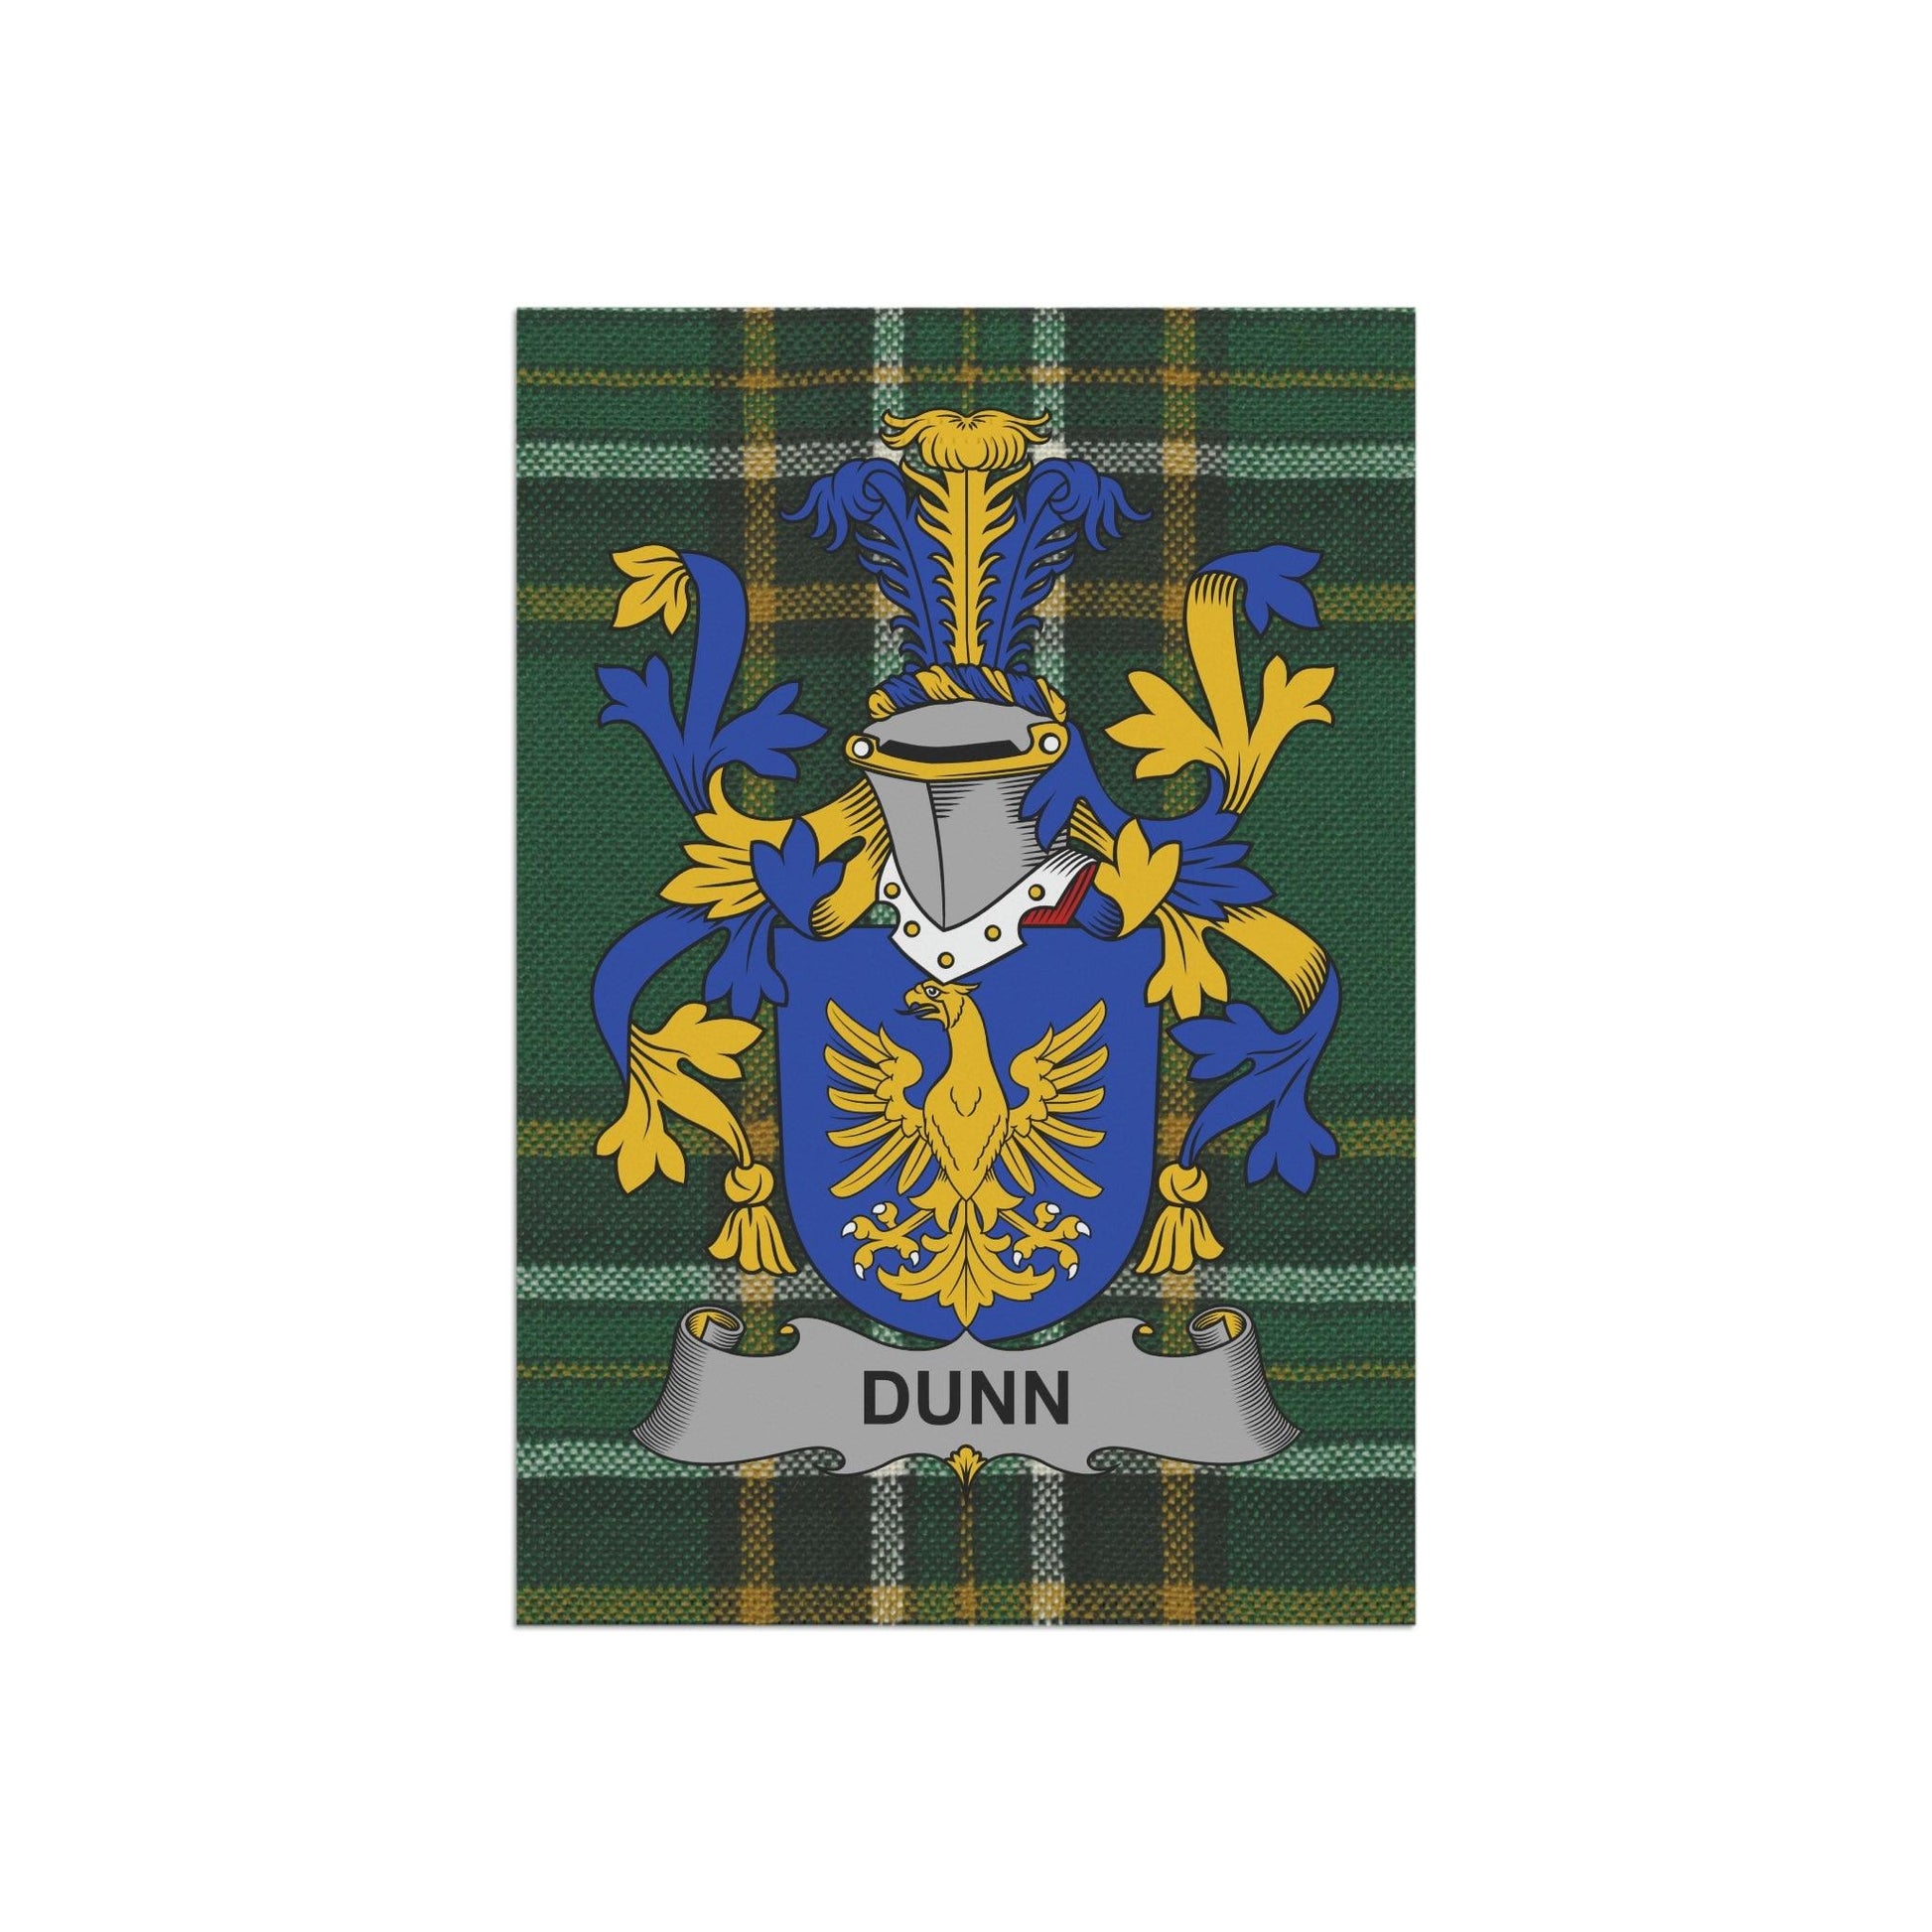 Dunn Coat Of Arms Irish Garden Flag